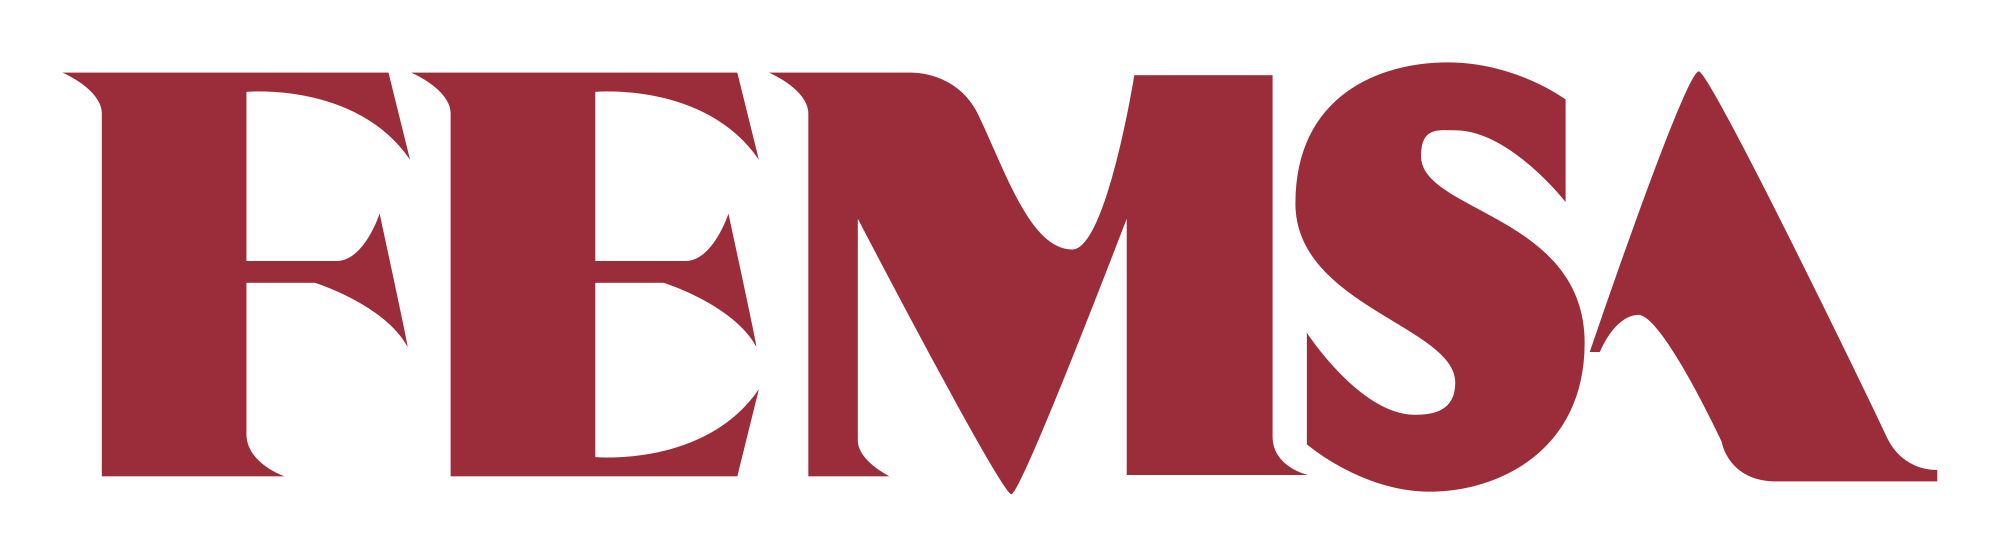 FEMSA Brand Logo